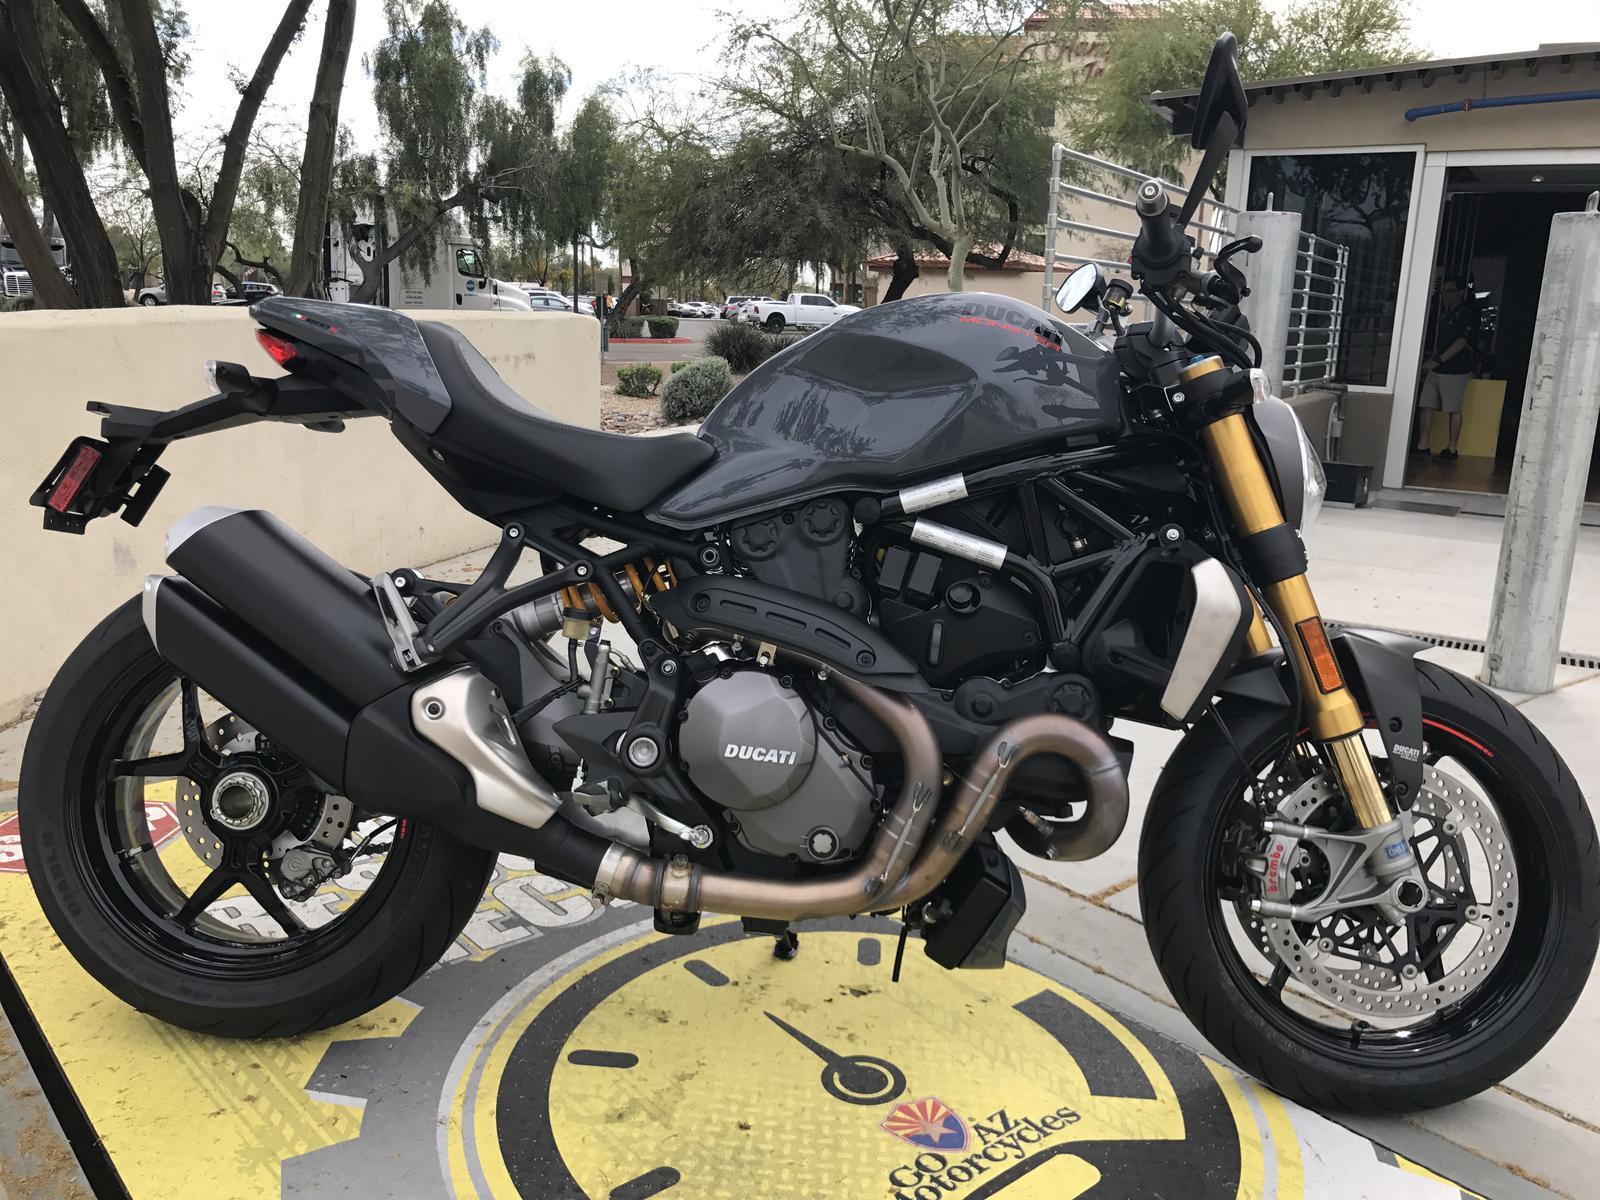 Ducati MONSTER 1200S in Peoria, AZ. GO AZ Motorcycles